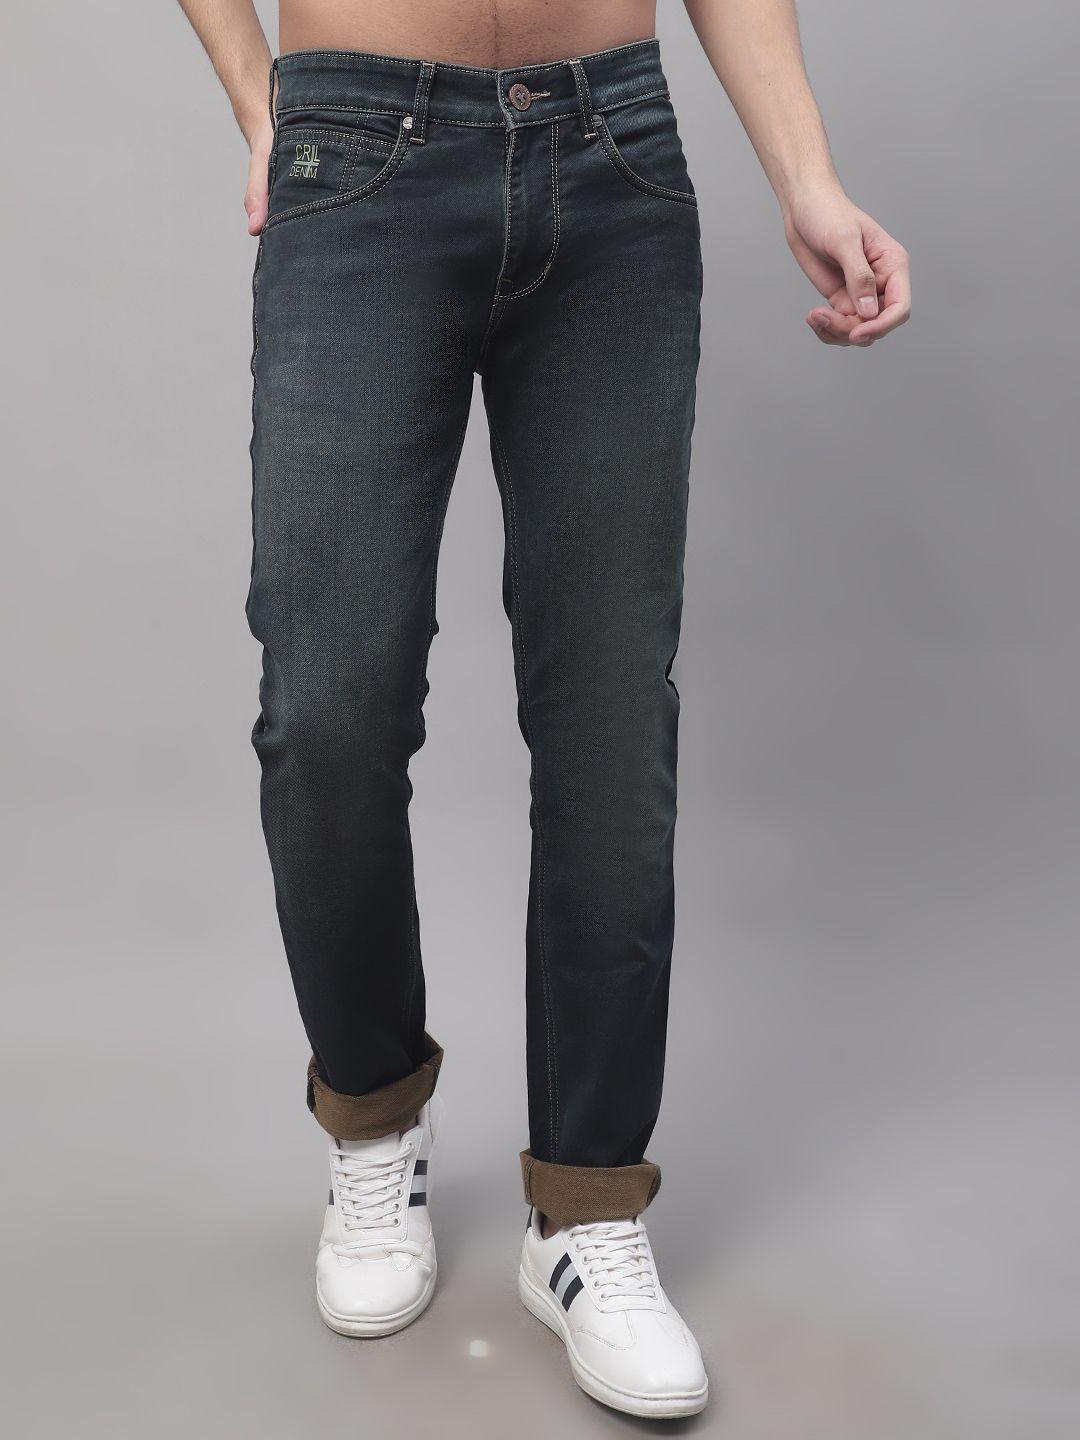 cantabil men khaki light fade stretchable jeans